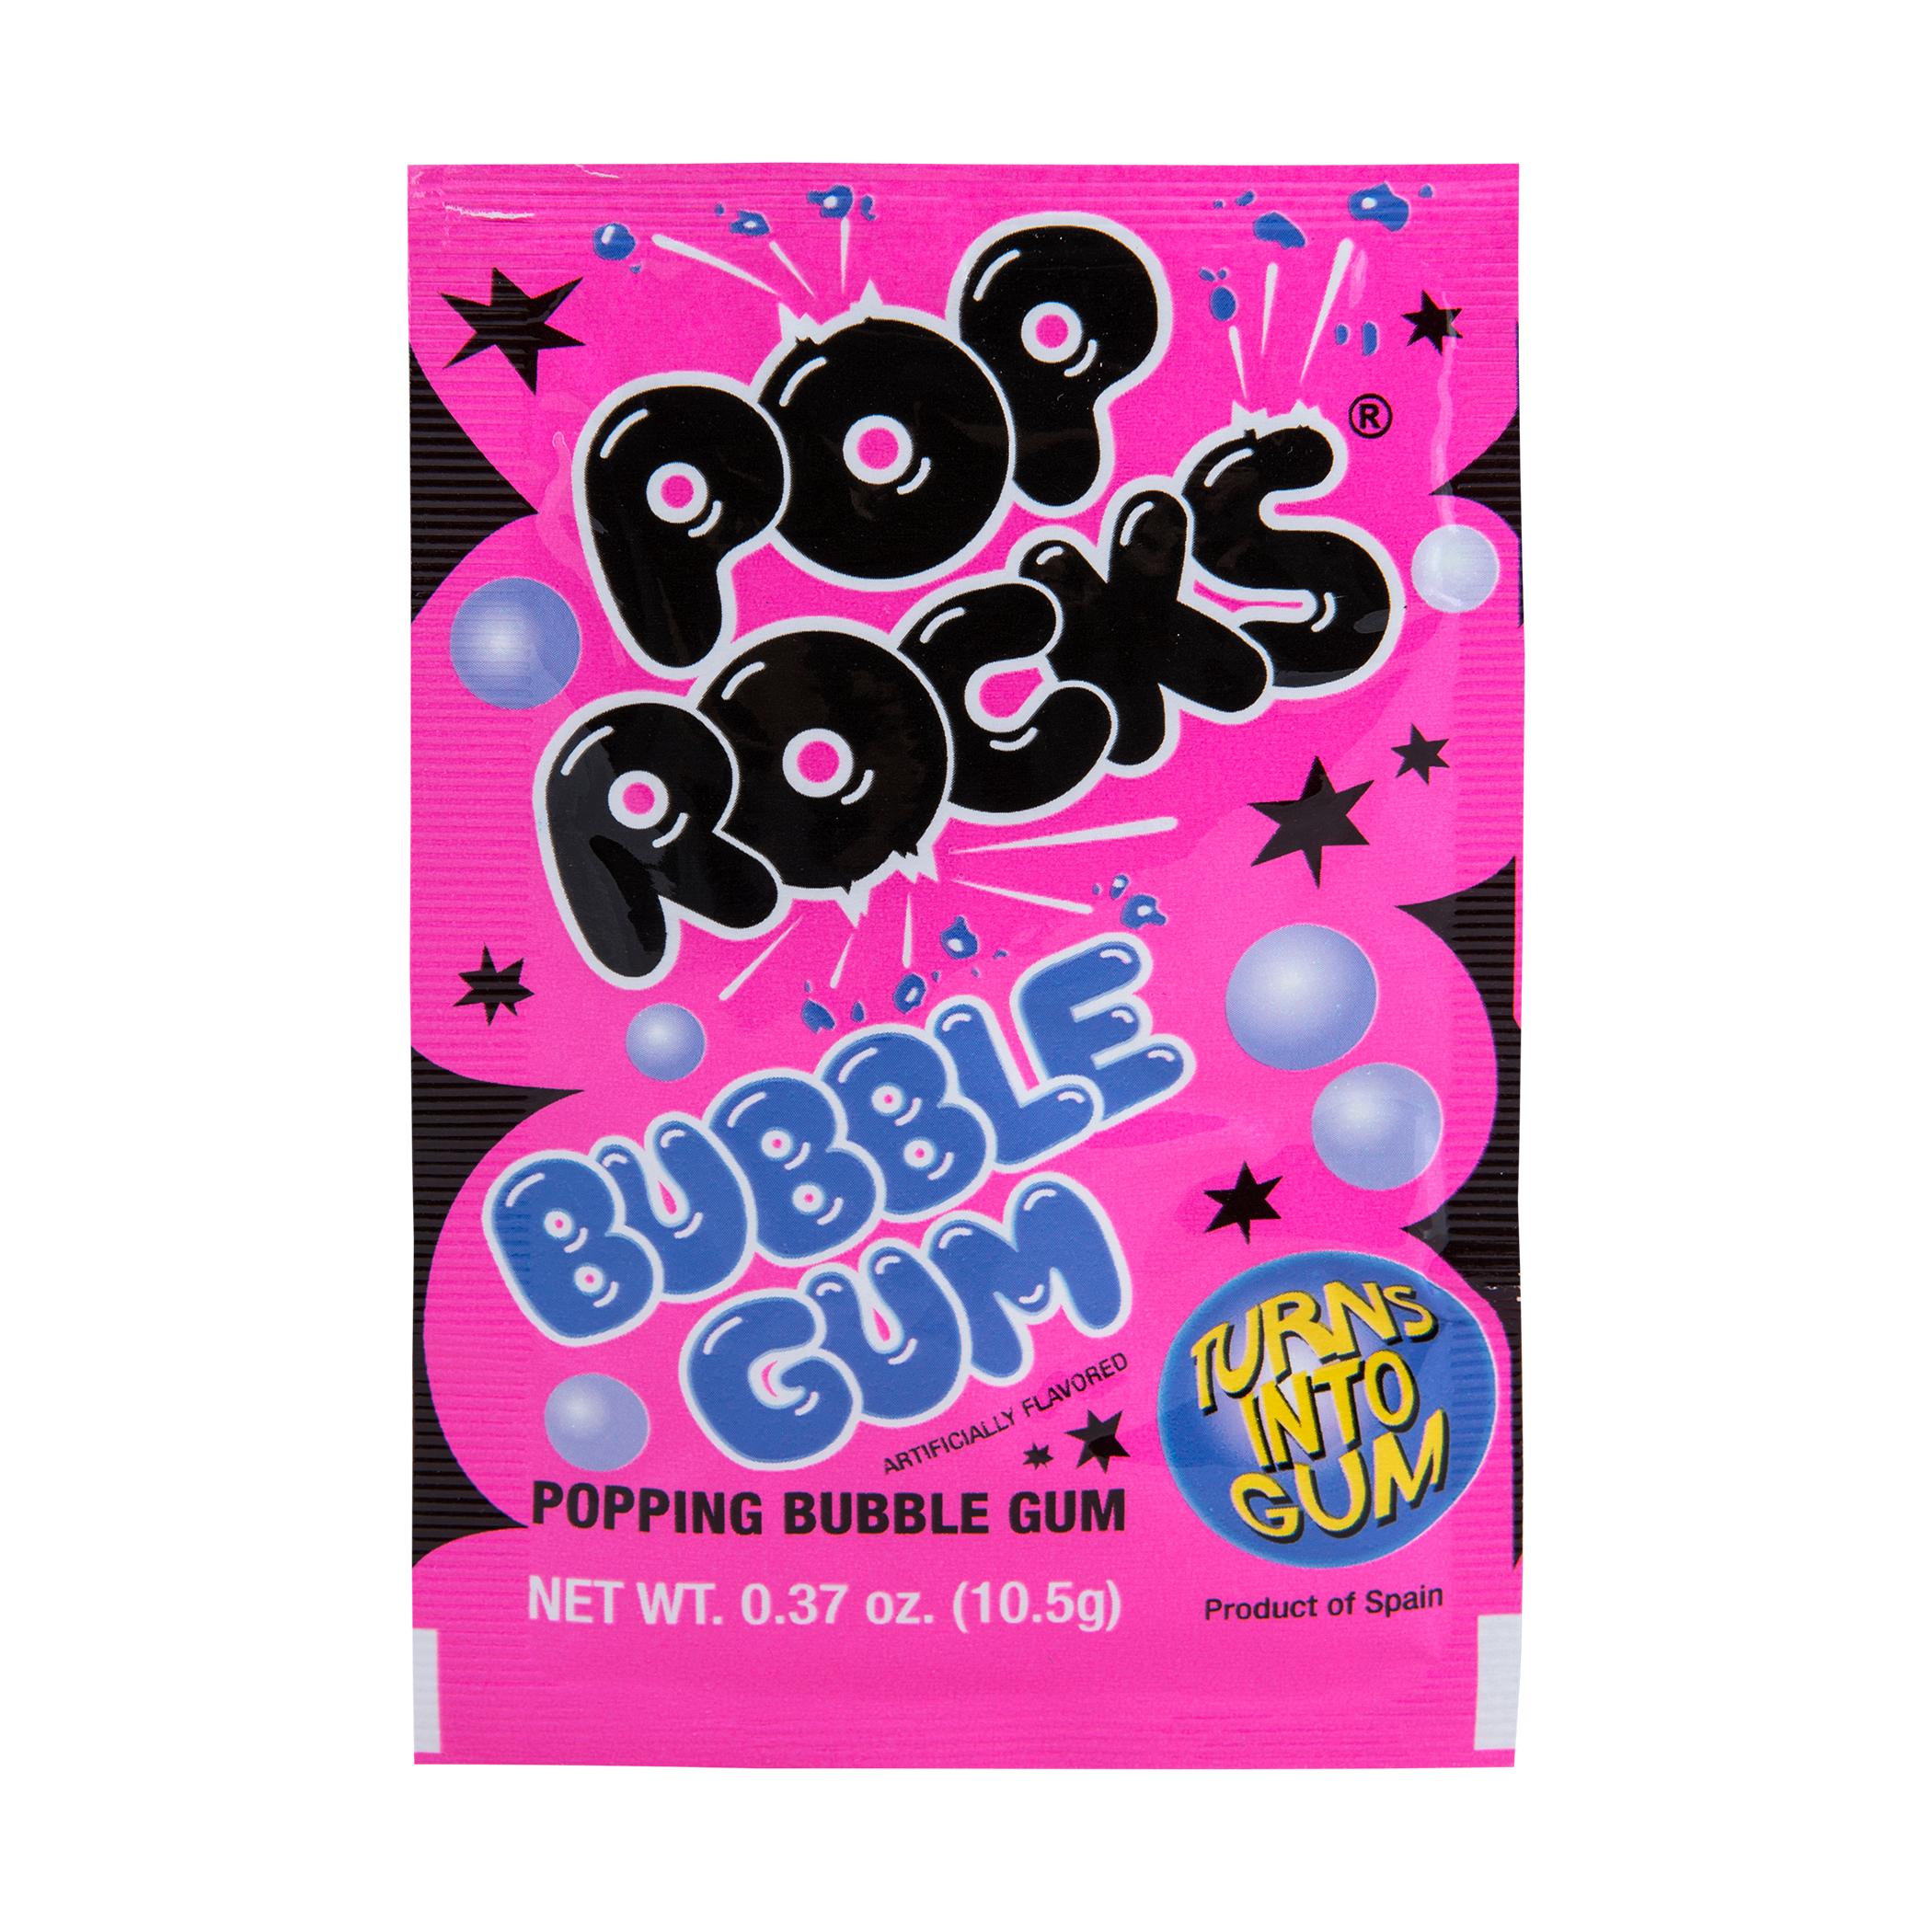 Mast General Store | Pop Rocks Rocks Bubble Gum C24t